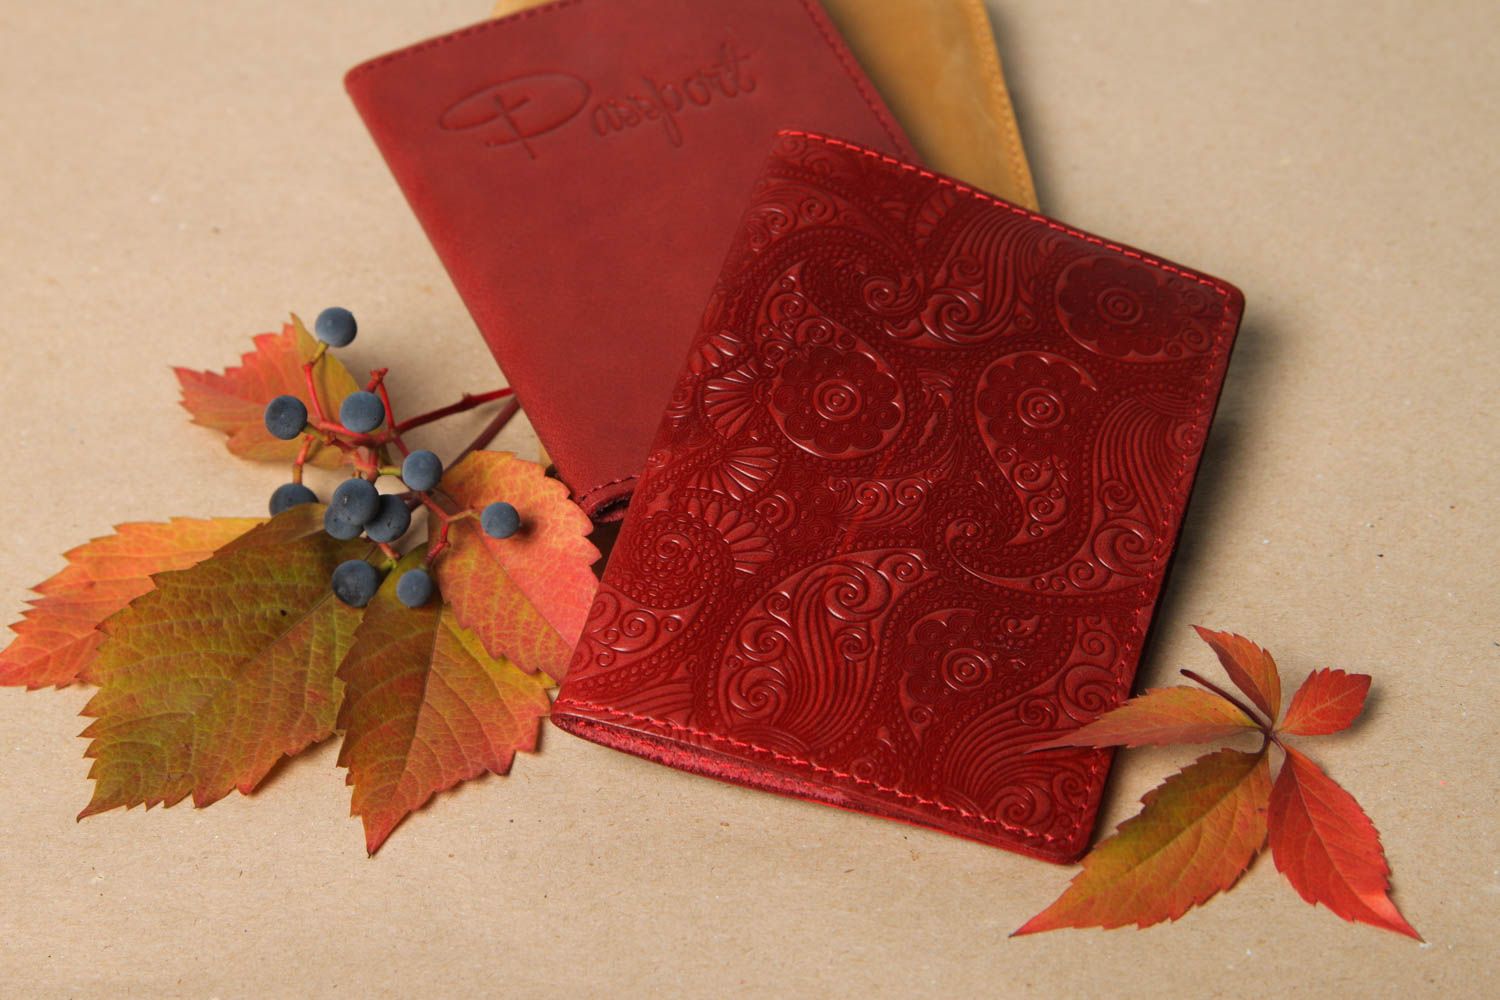 Unusual handmade passport cover handmade accessories leather goods gift ideas photo 1